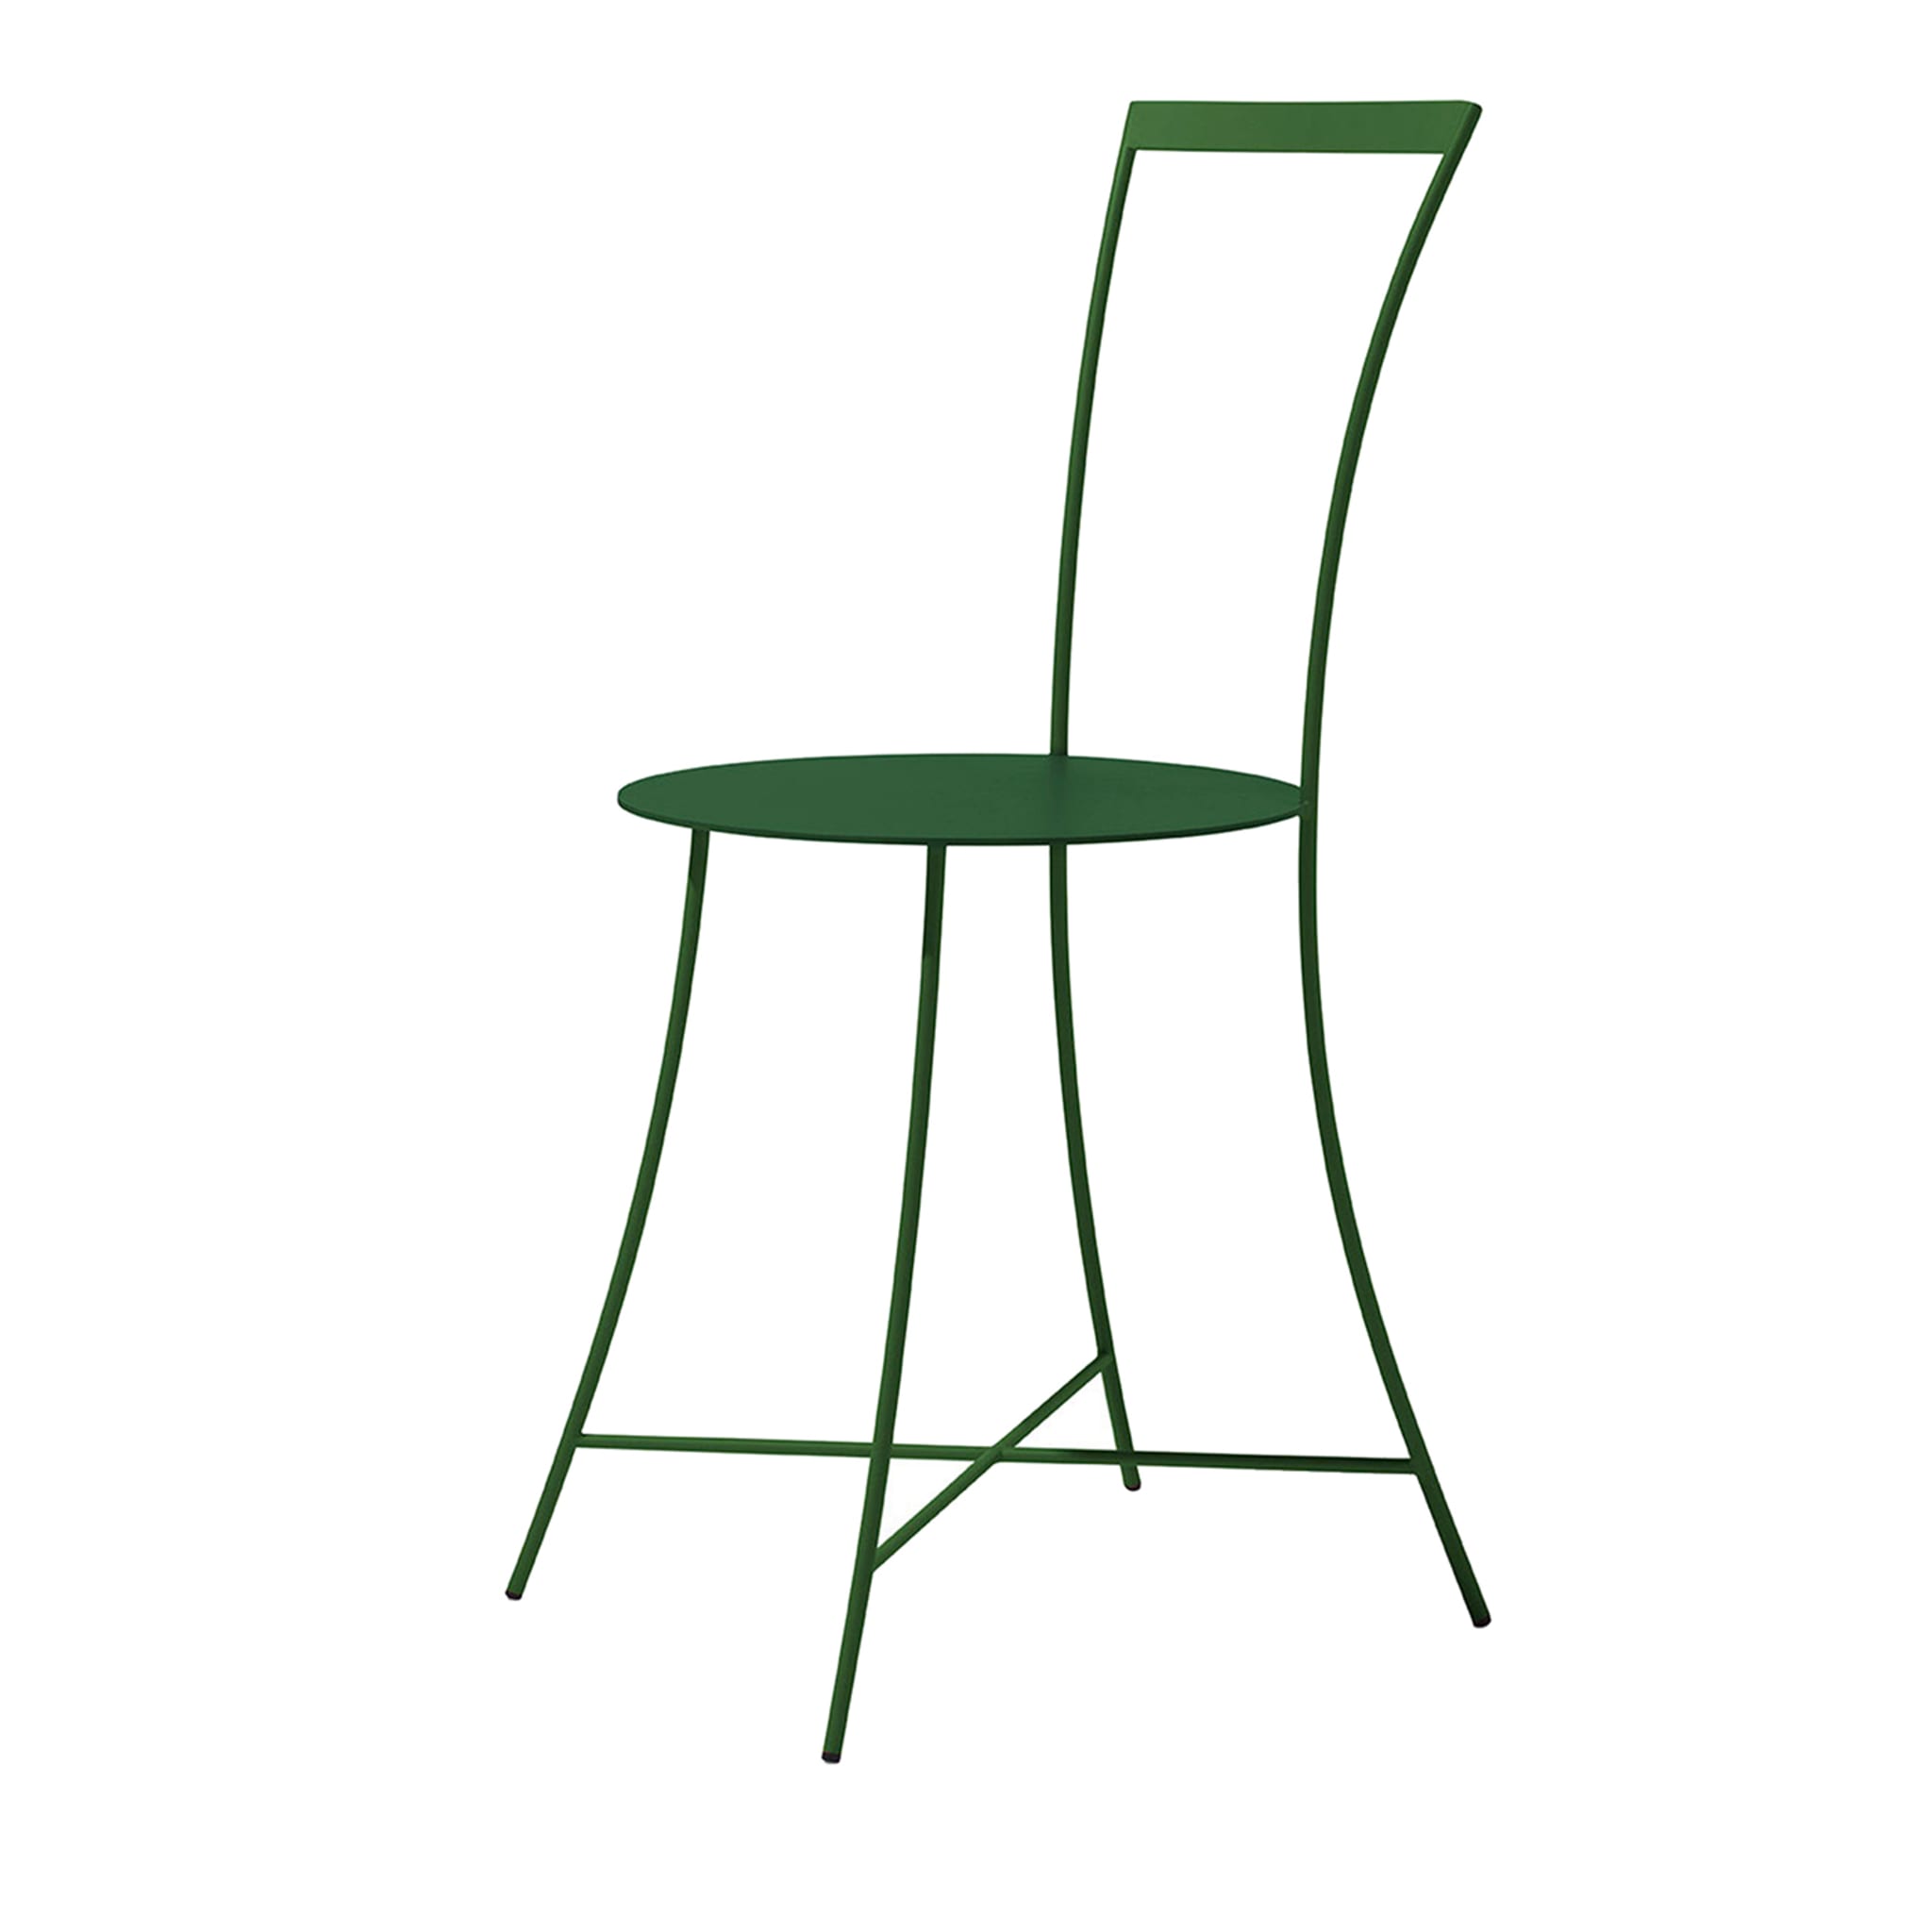 Irma Green Chair by Mario Scairato - Main view